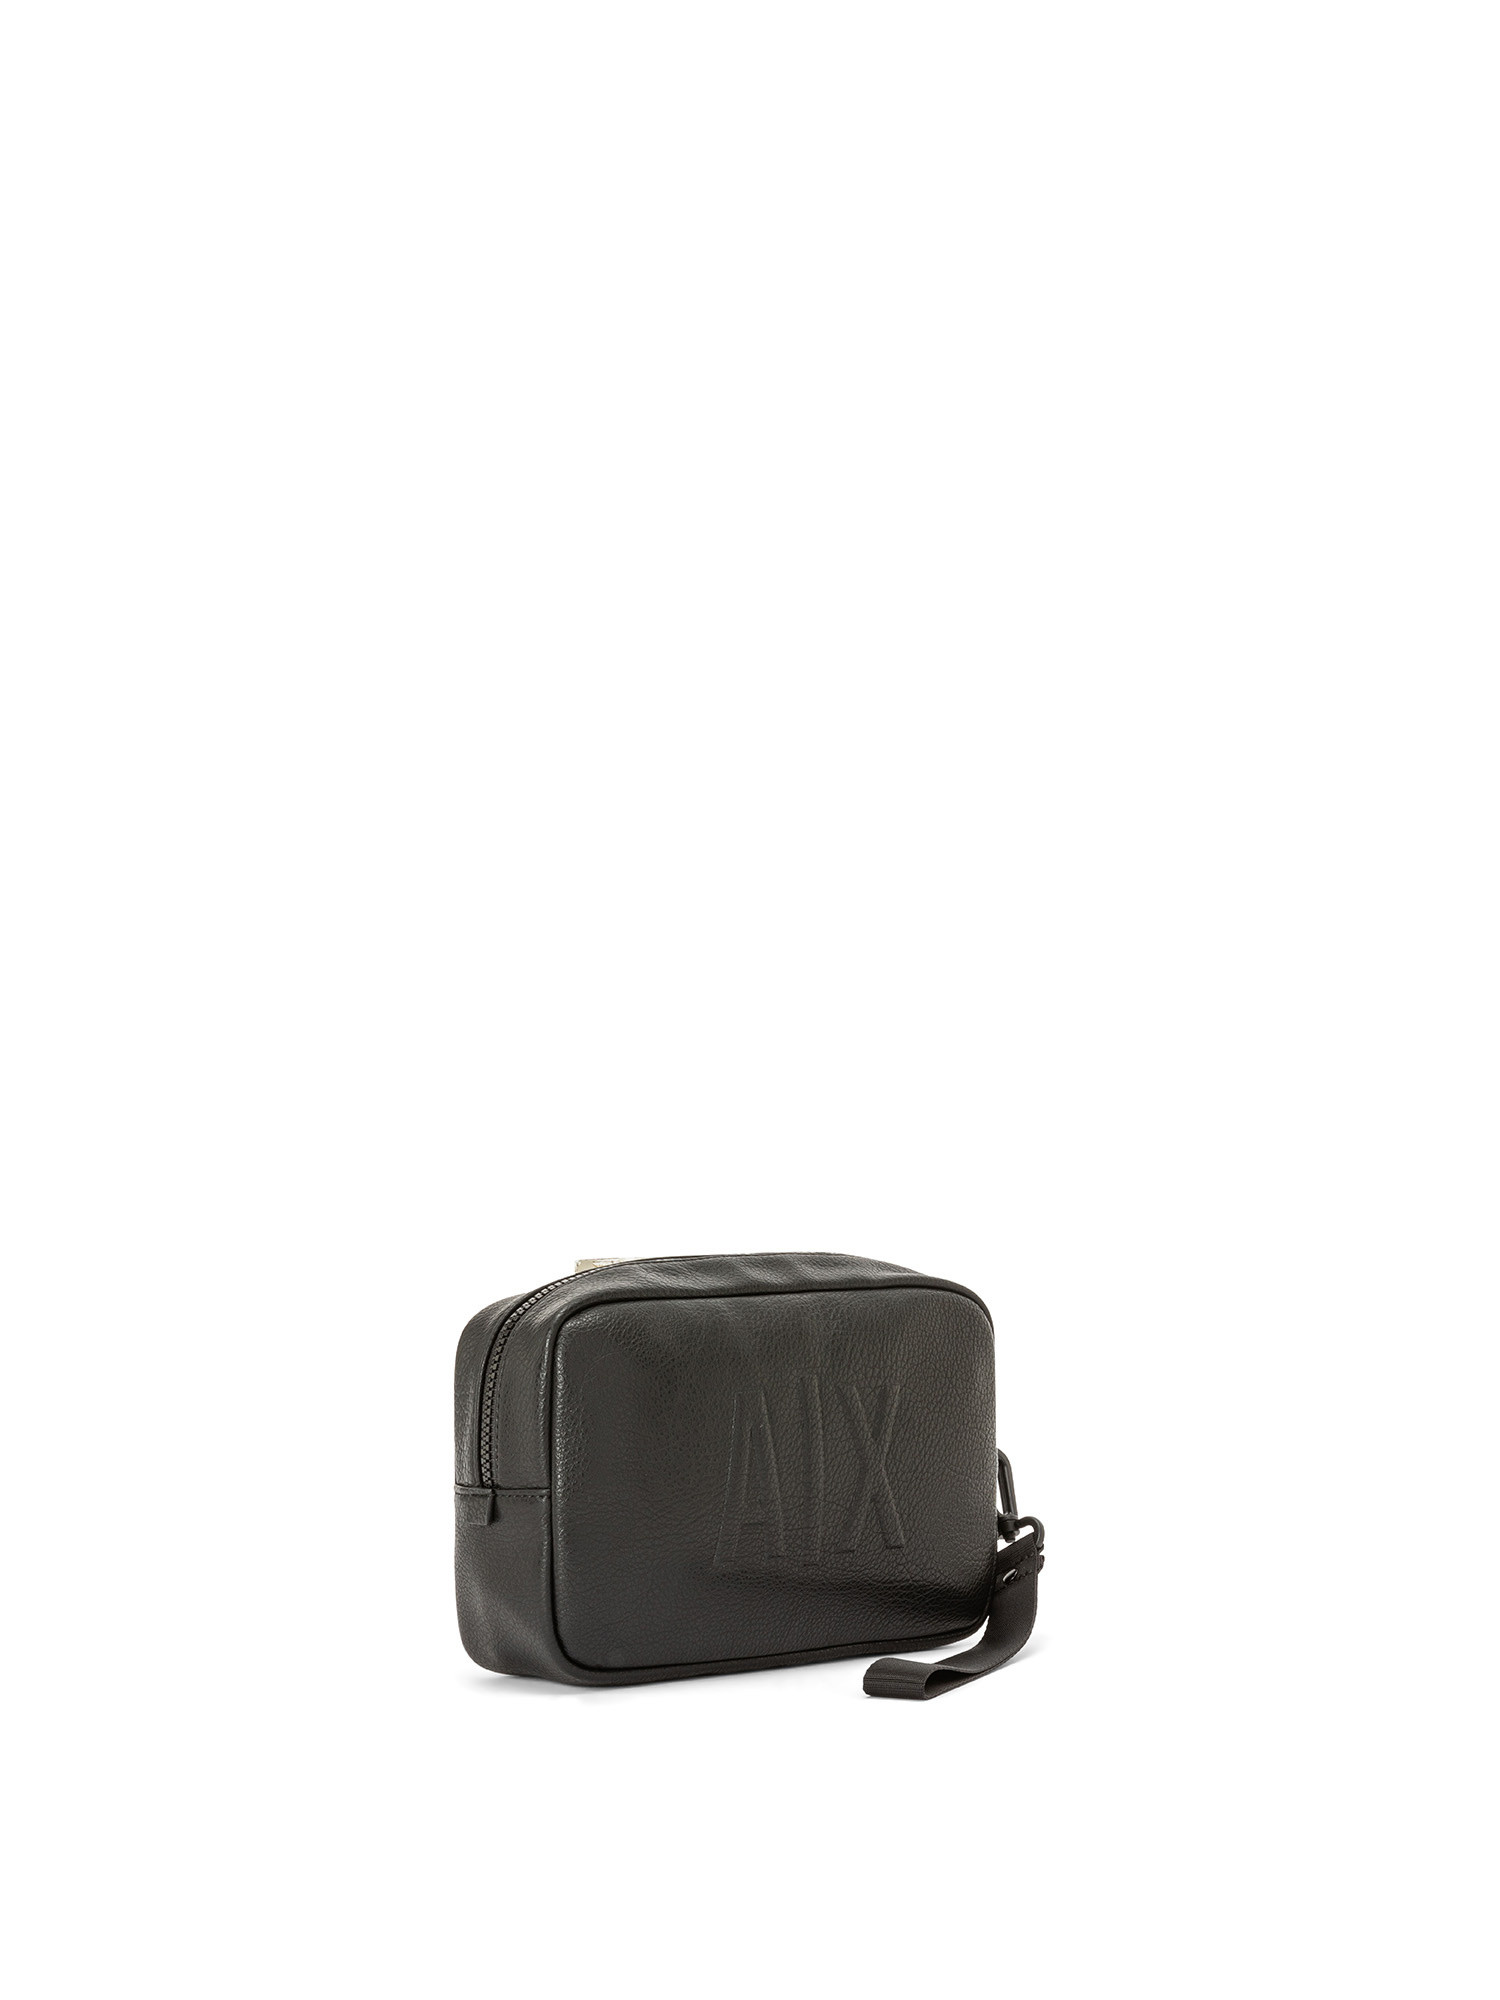 Armani Exchange - Beauty case with logo, Black, large image number 1